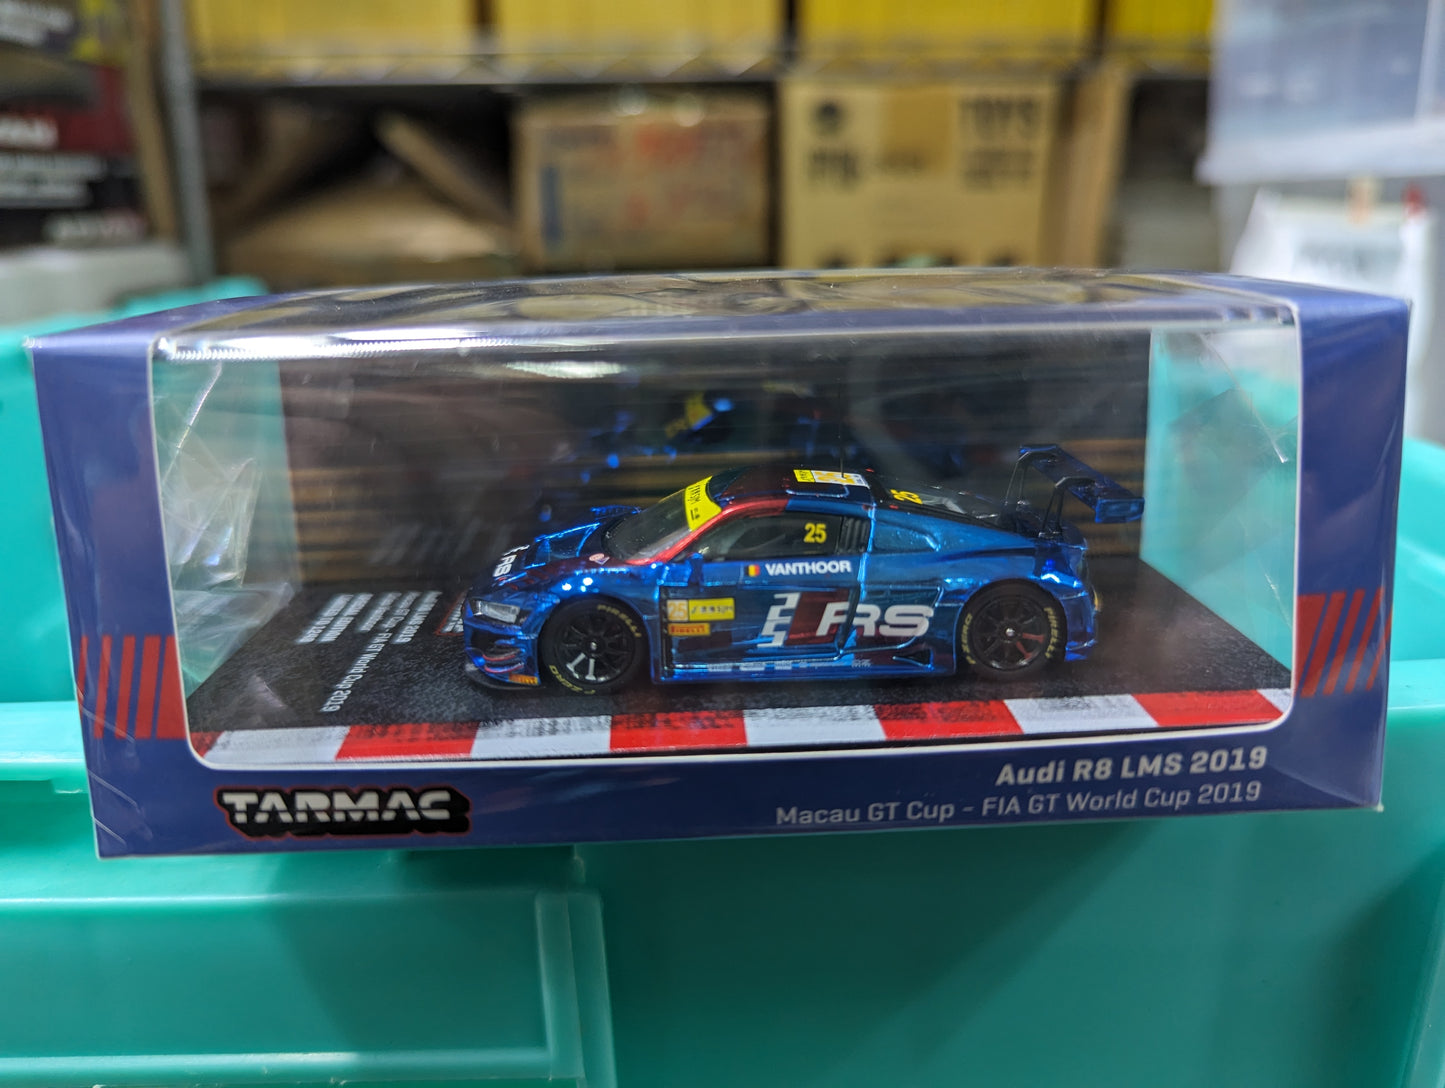 Tarmac Works Audi R8 LMS 2019
Macau GT Cup -FIA GT World Cup 2019